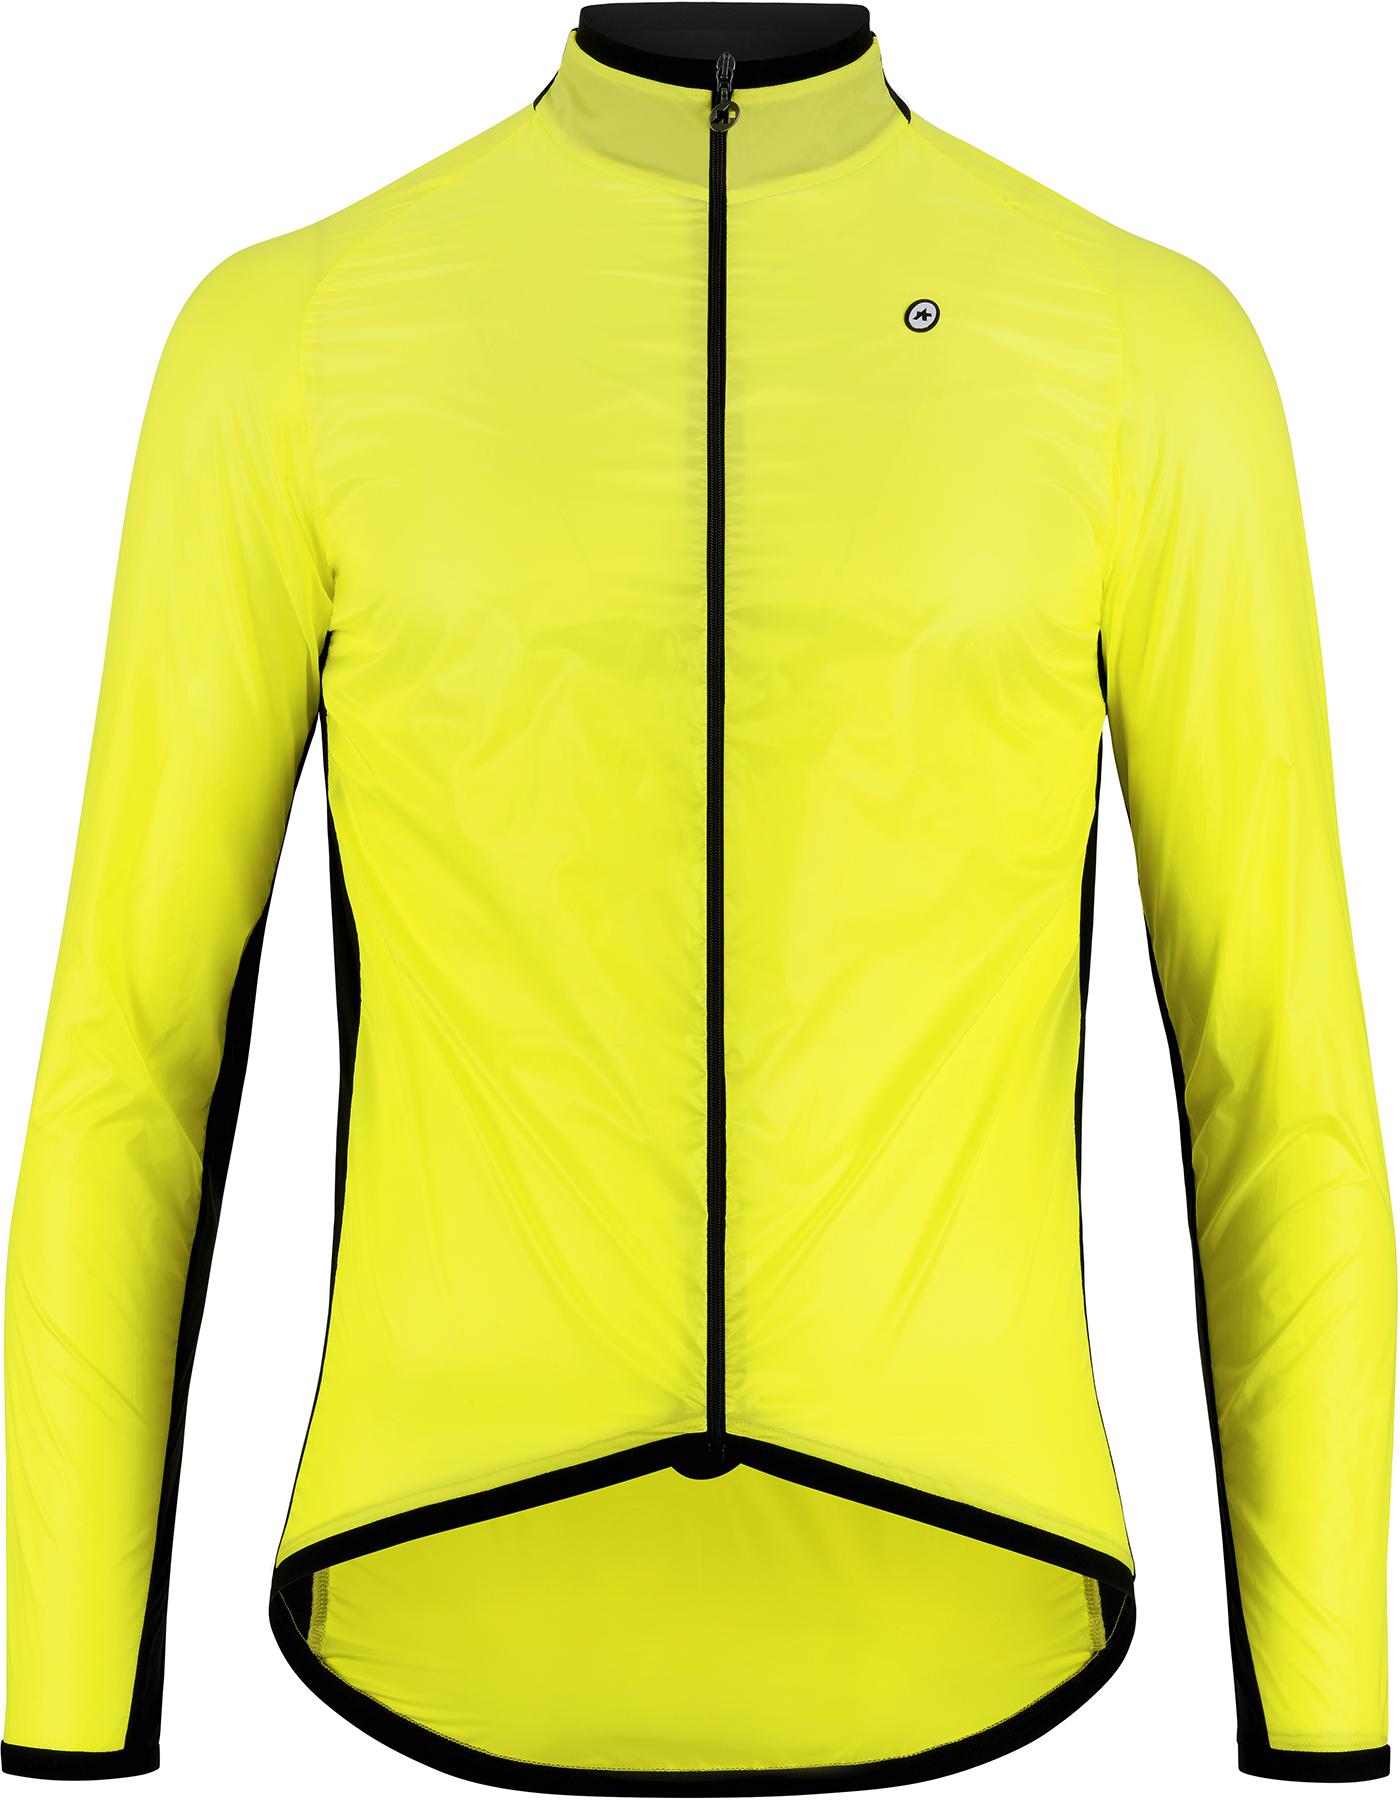 Assos Mille Gt Wind Jacket C2 - Optic Yellow